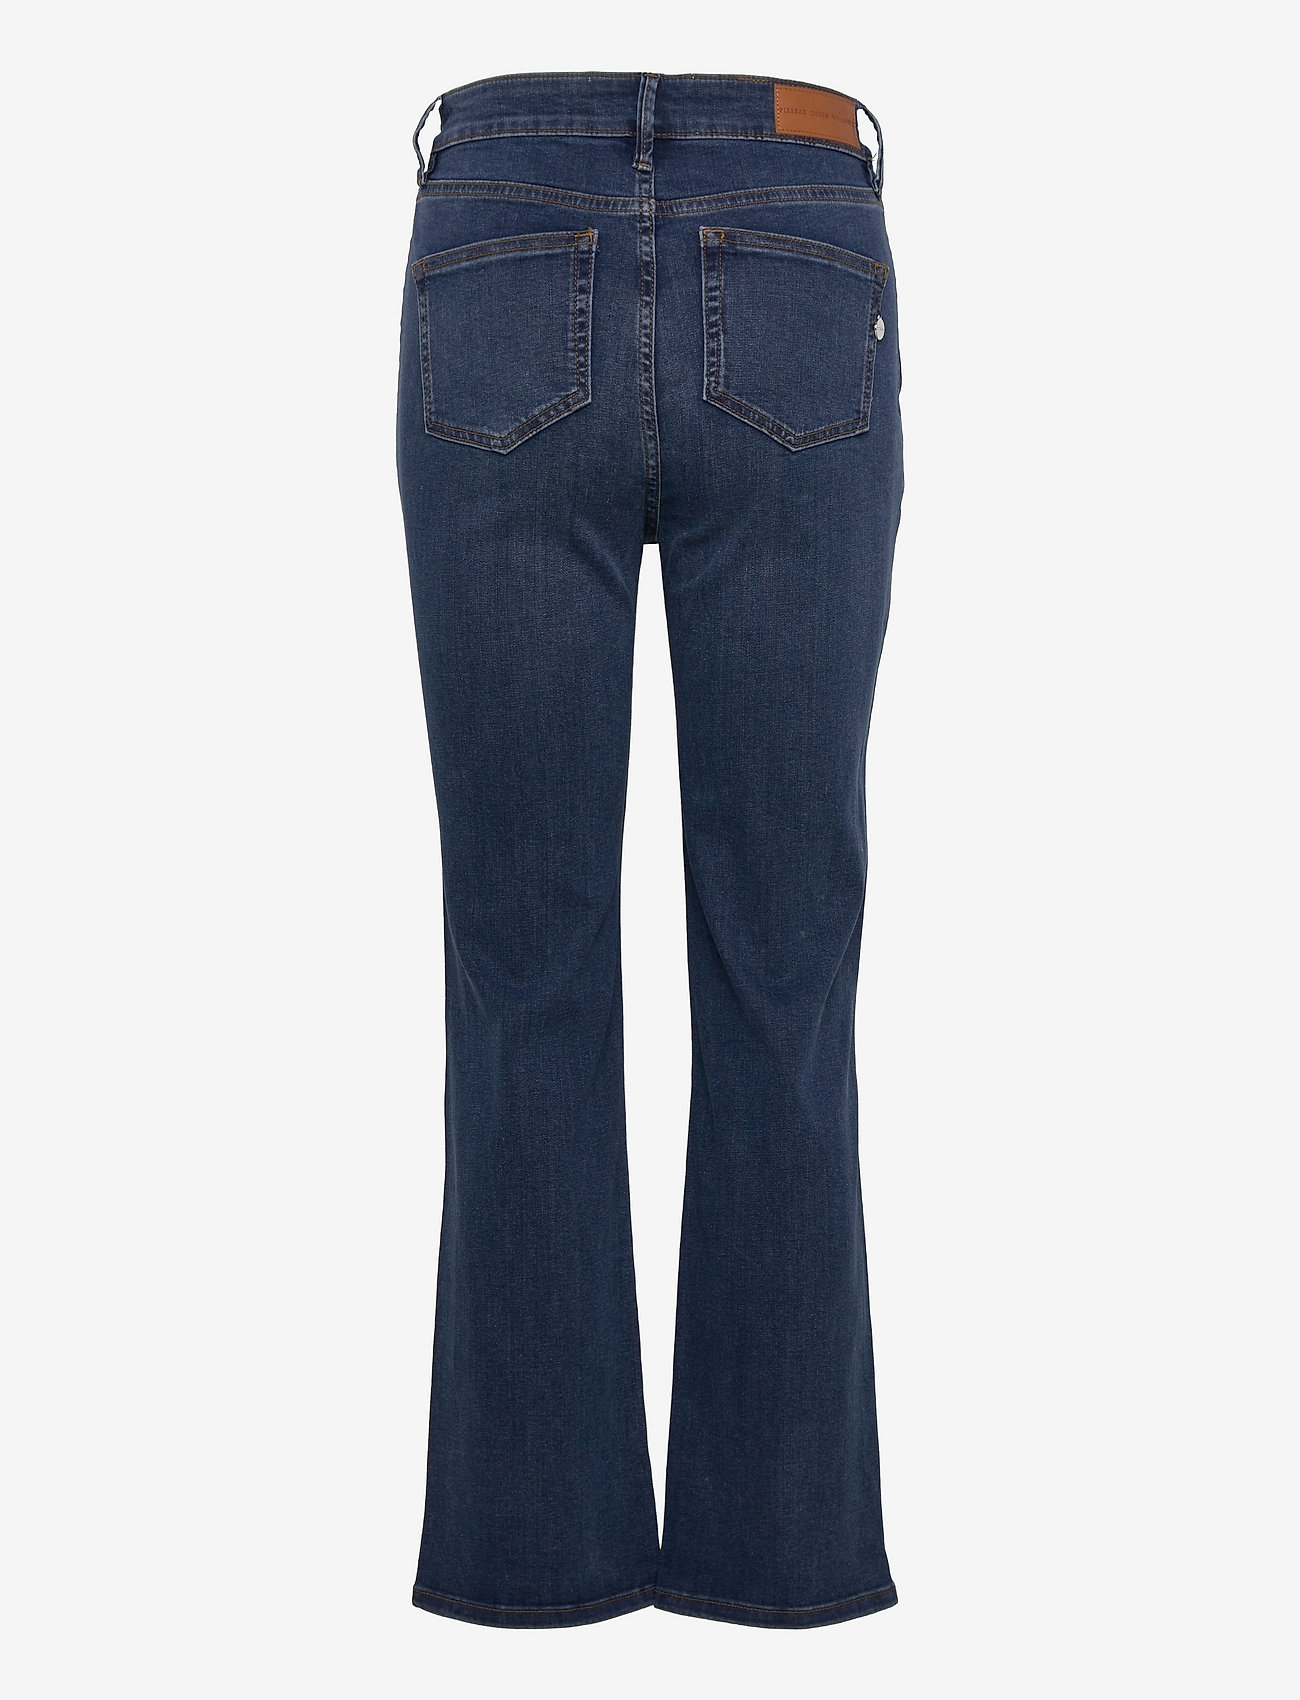 Pieszak - Jenora french jeans wash Malcesine - schlaghosen - denim blue - 1